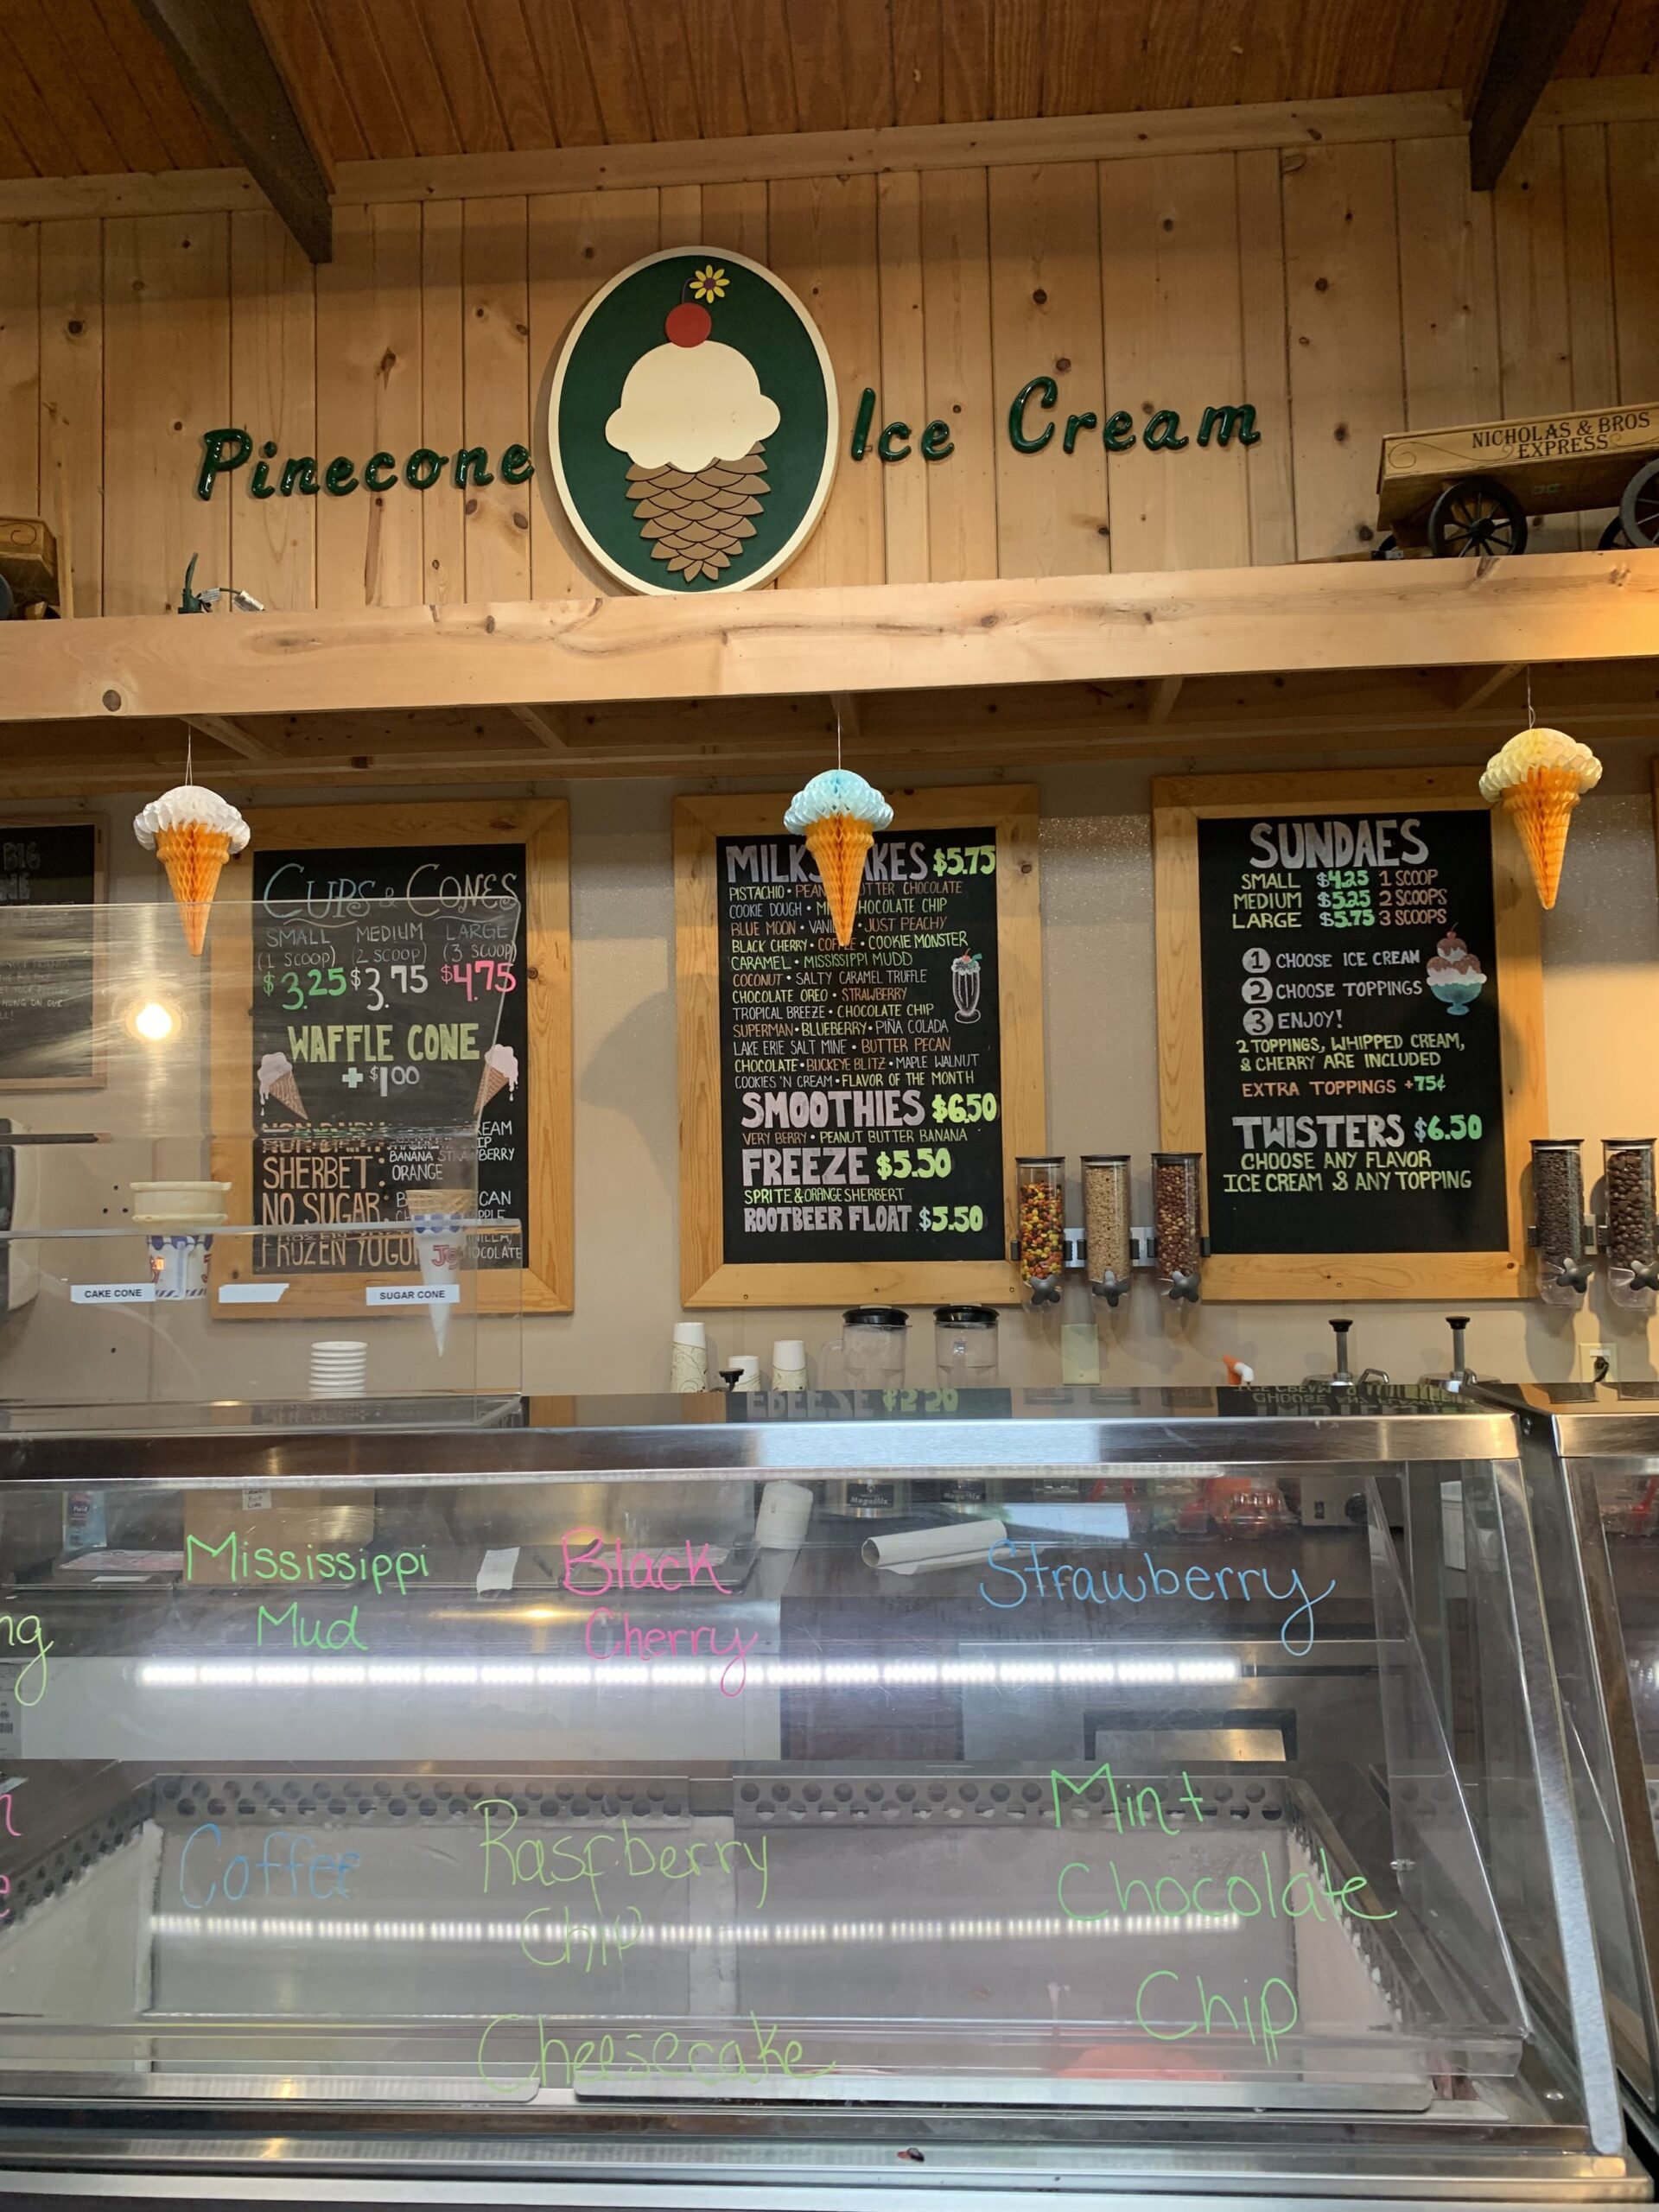 pinecone ice cream menu in north royalton ohio